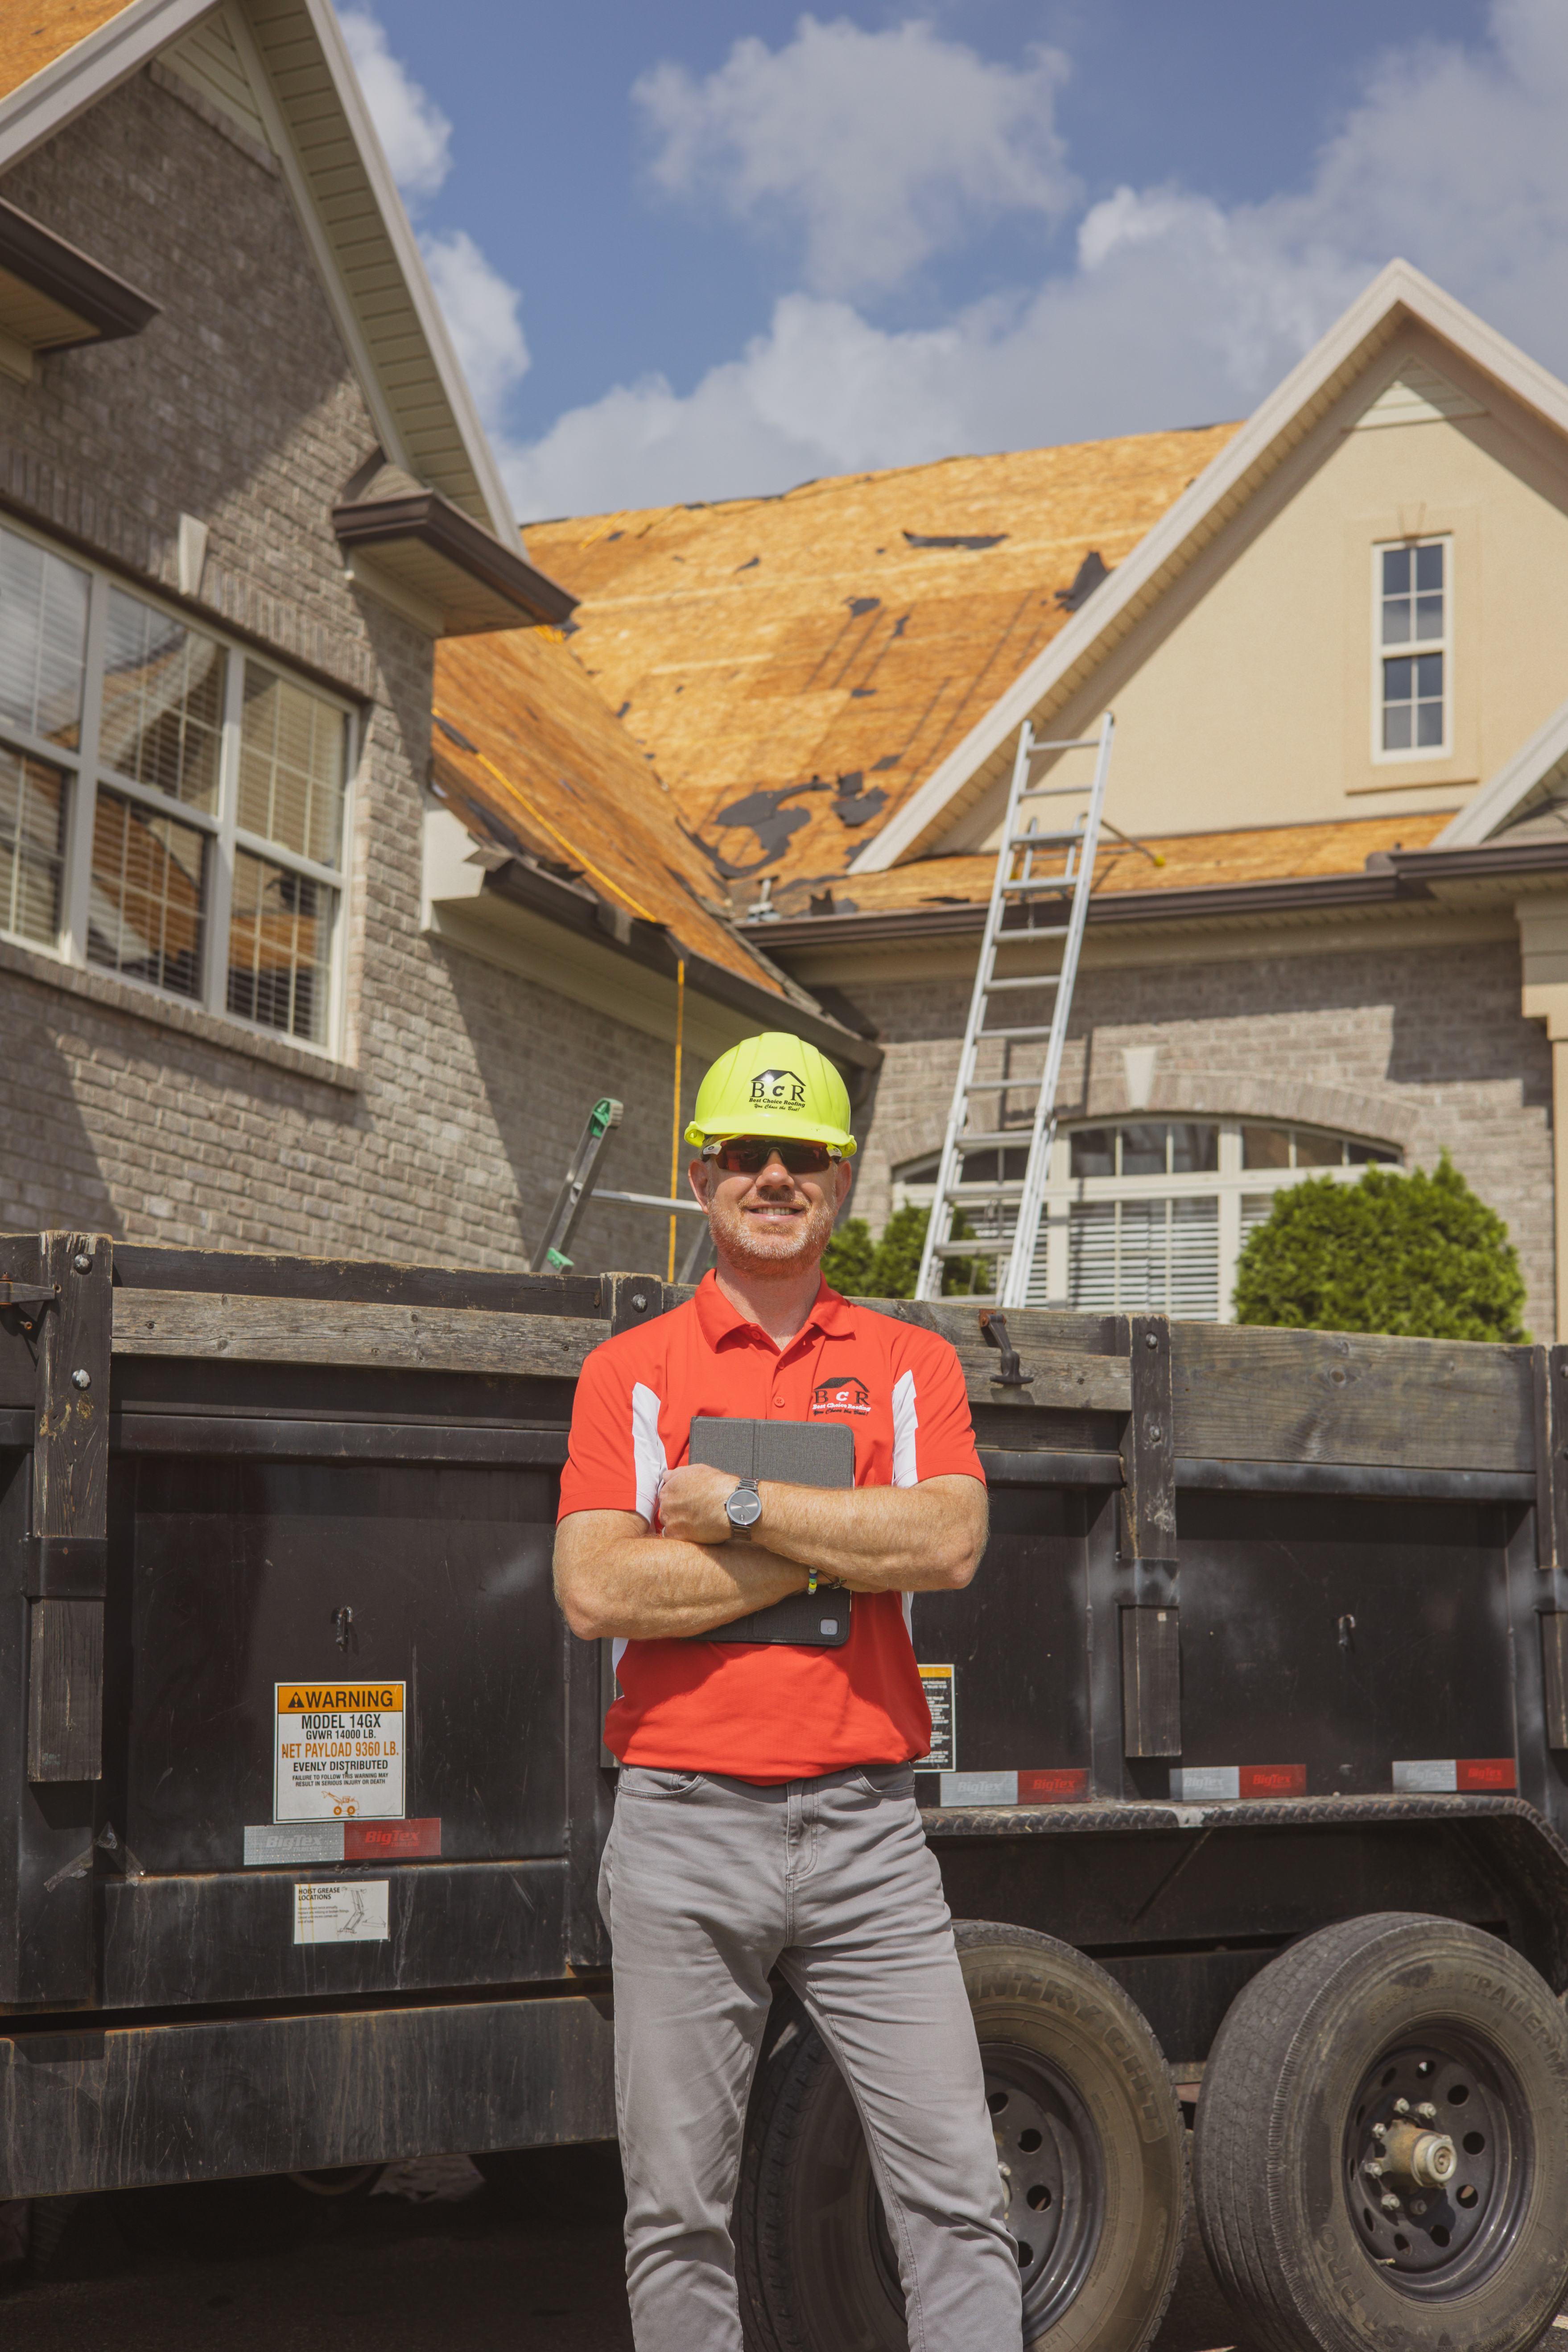 Arlington roofing expert